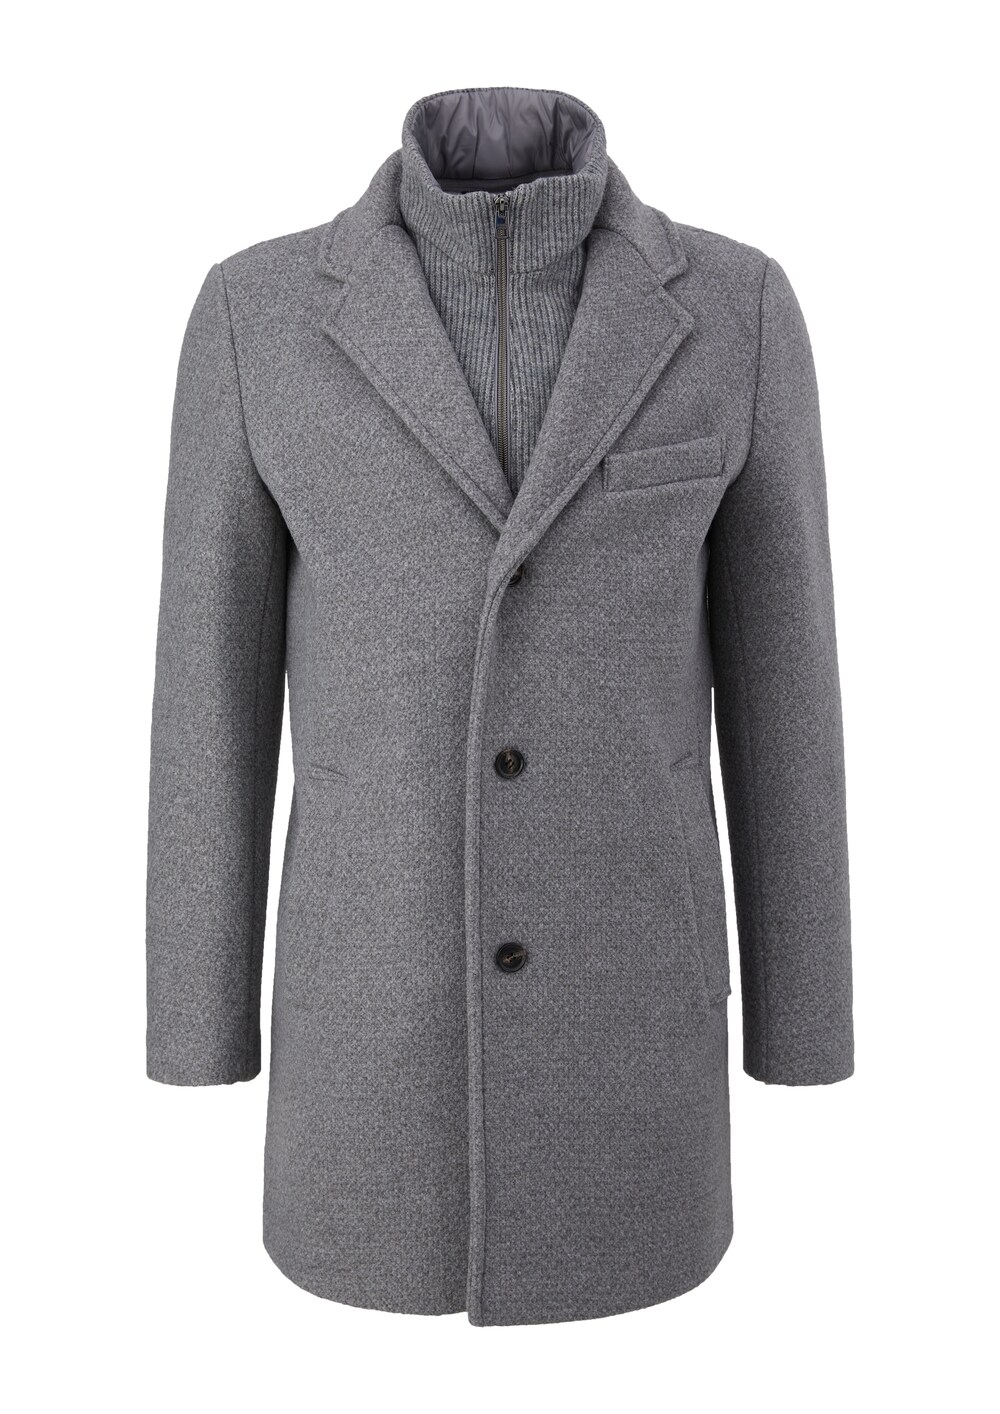 Межсезонное пальто S.Oliver, пестрый серый межсезонное пальто edited ekaterina пестрый серый